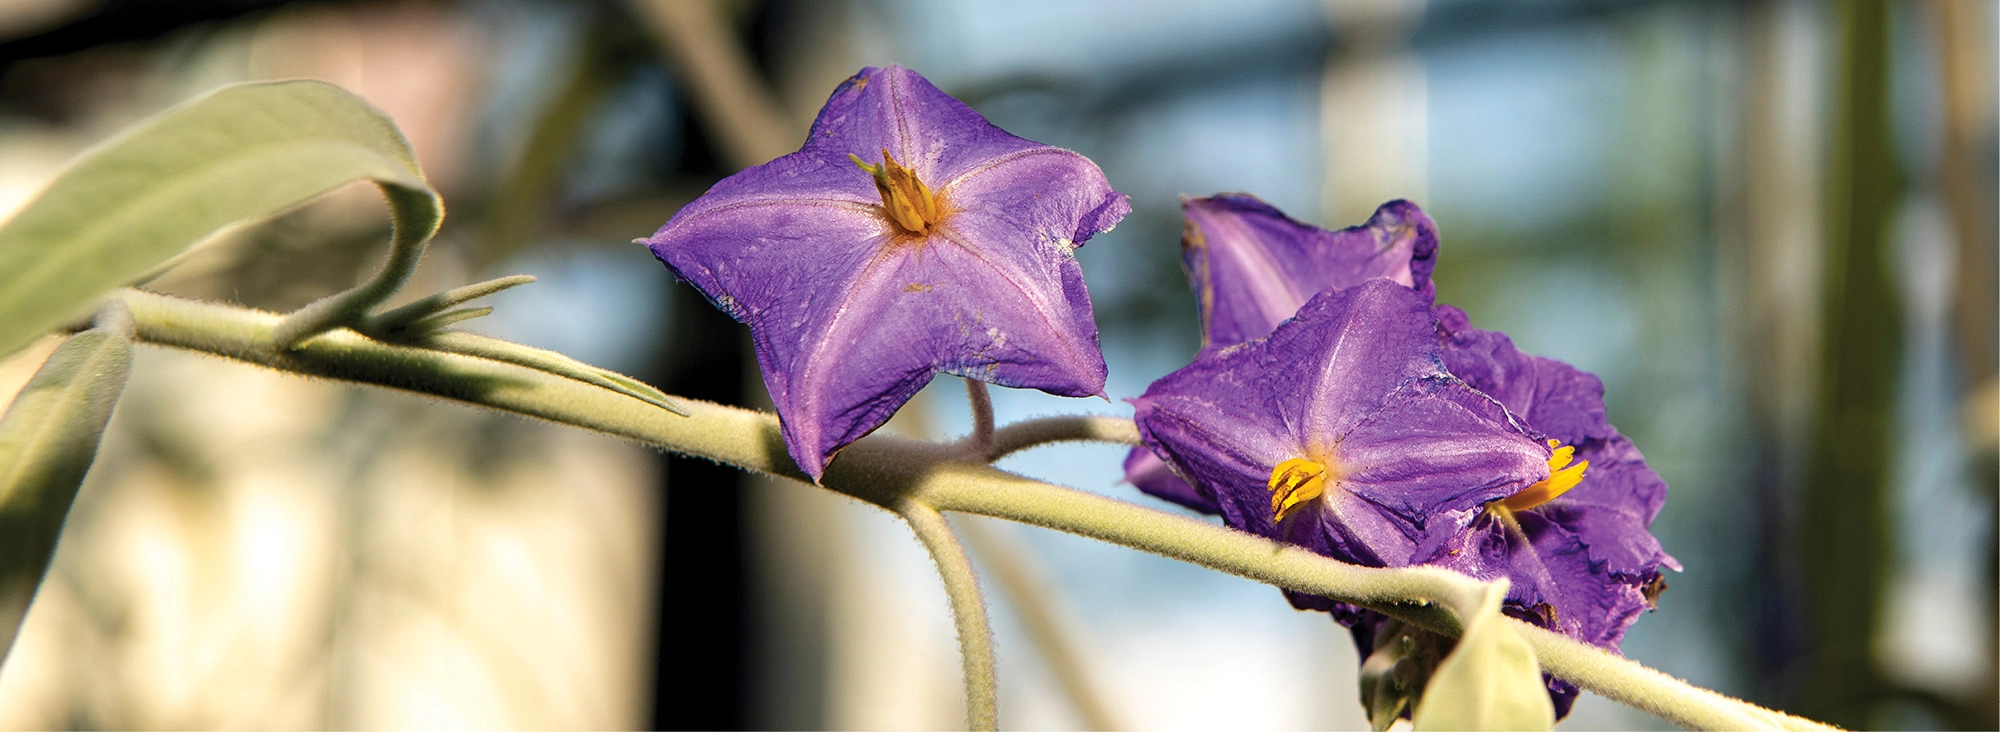 Solanum scalarium has an unusual ladder-like arrangement of prickles on its stems.